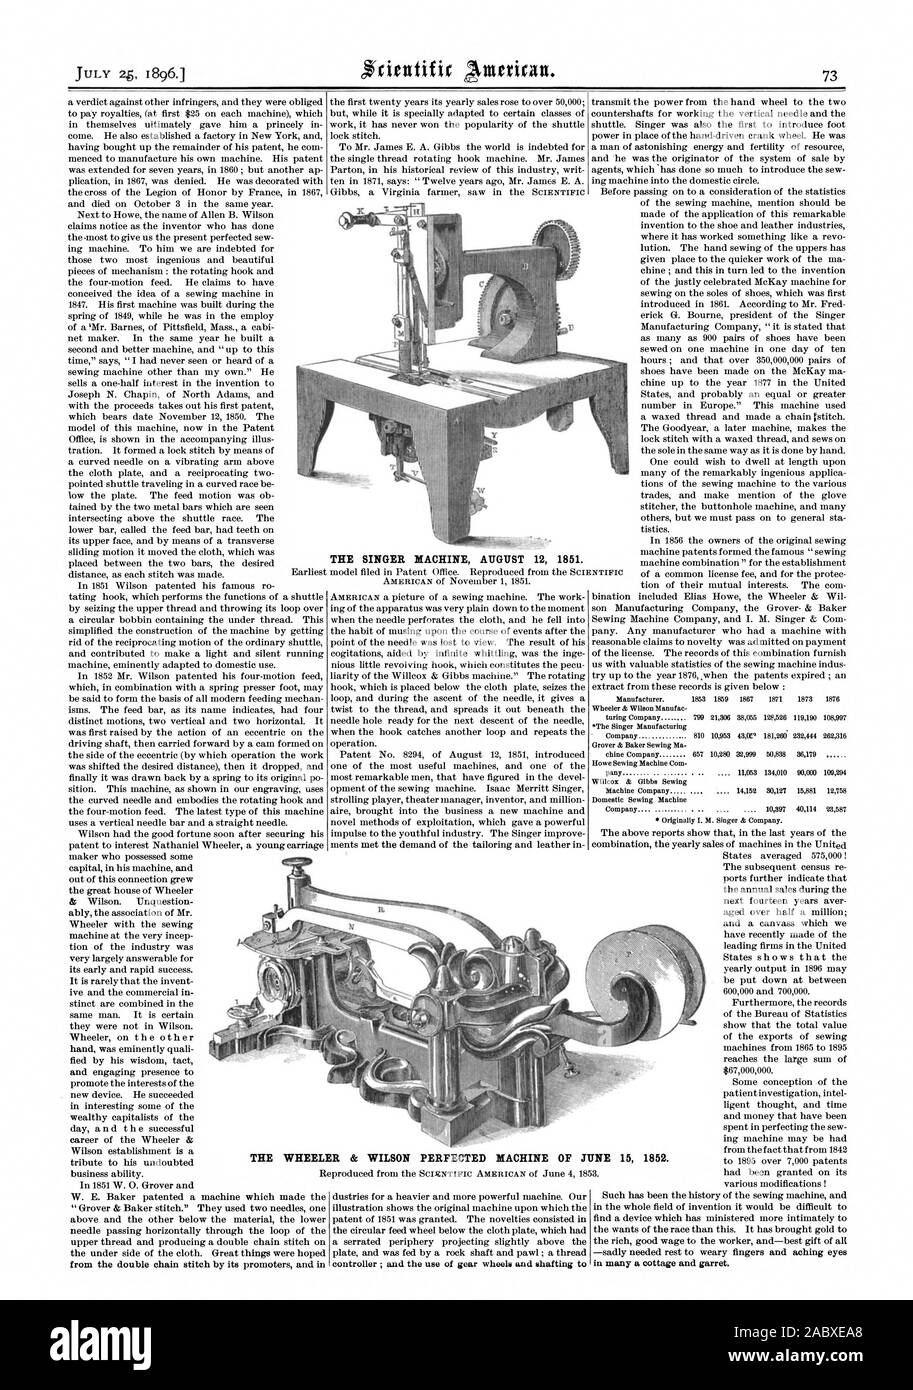 THE SINGER MACHINE AUGUST 12 1851. THE WHEELER & WILSON PERFECTED MACHINE OF JUNE 15 1852., scientific american, 1896-07-25 Stock Photo